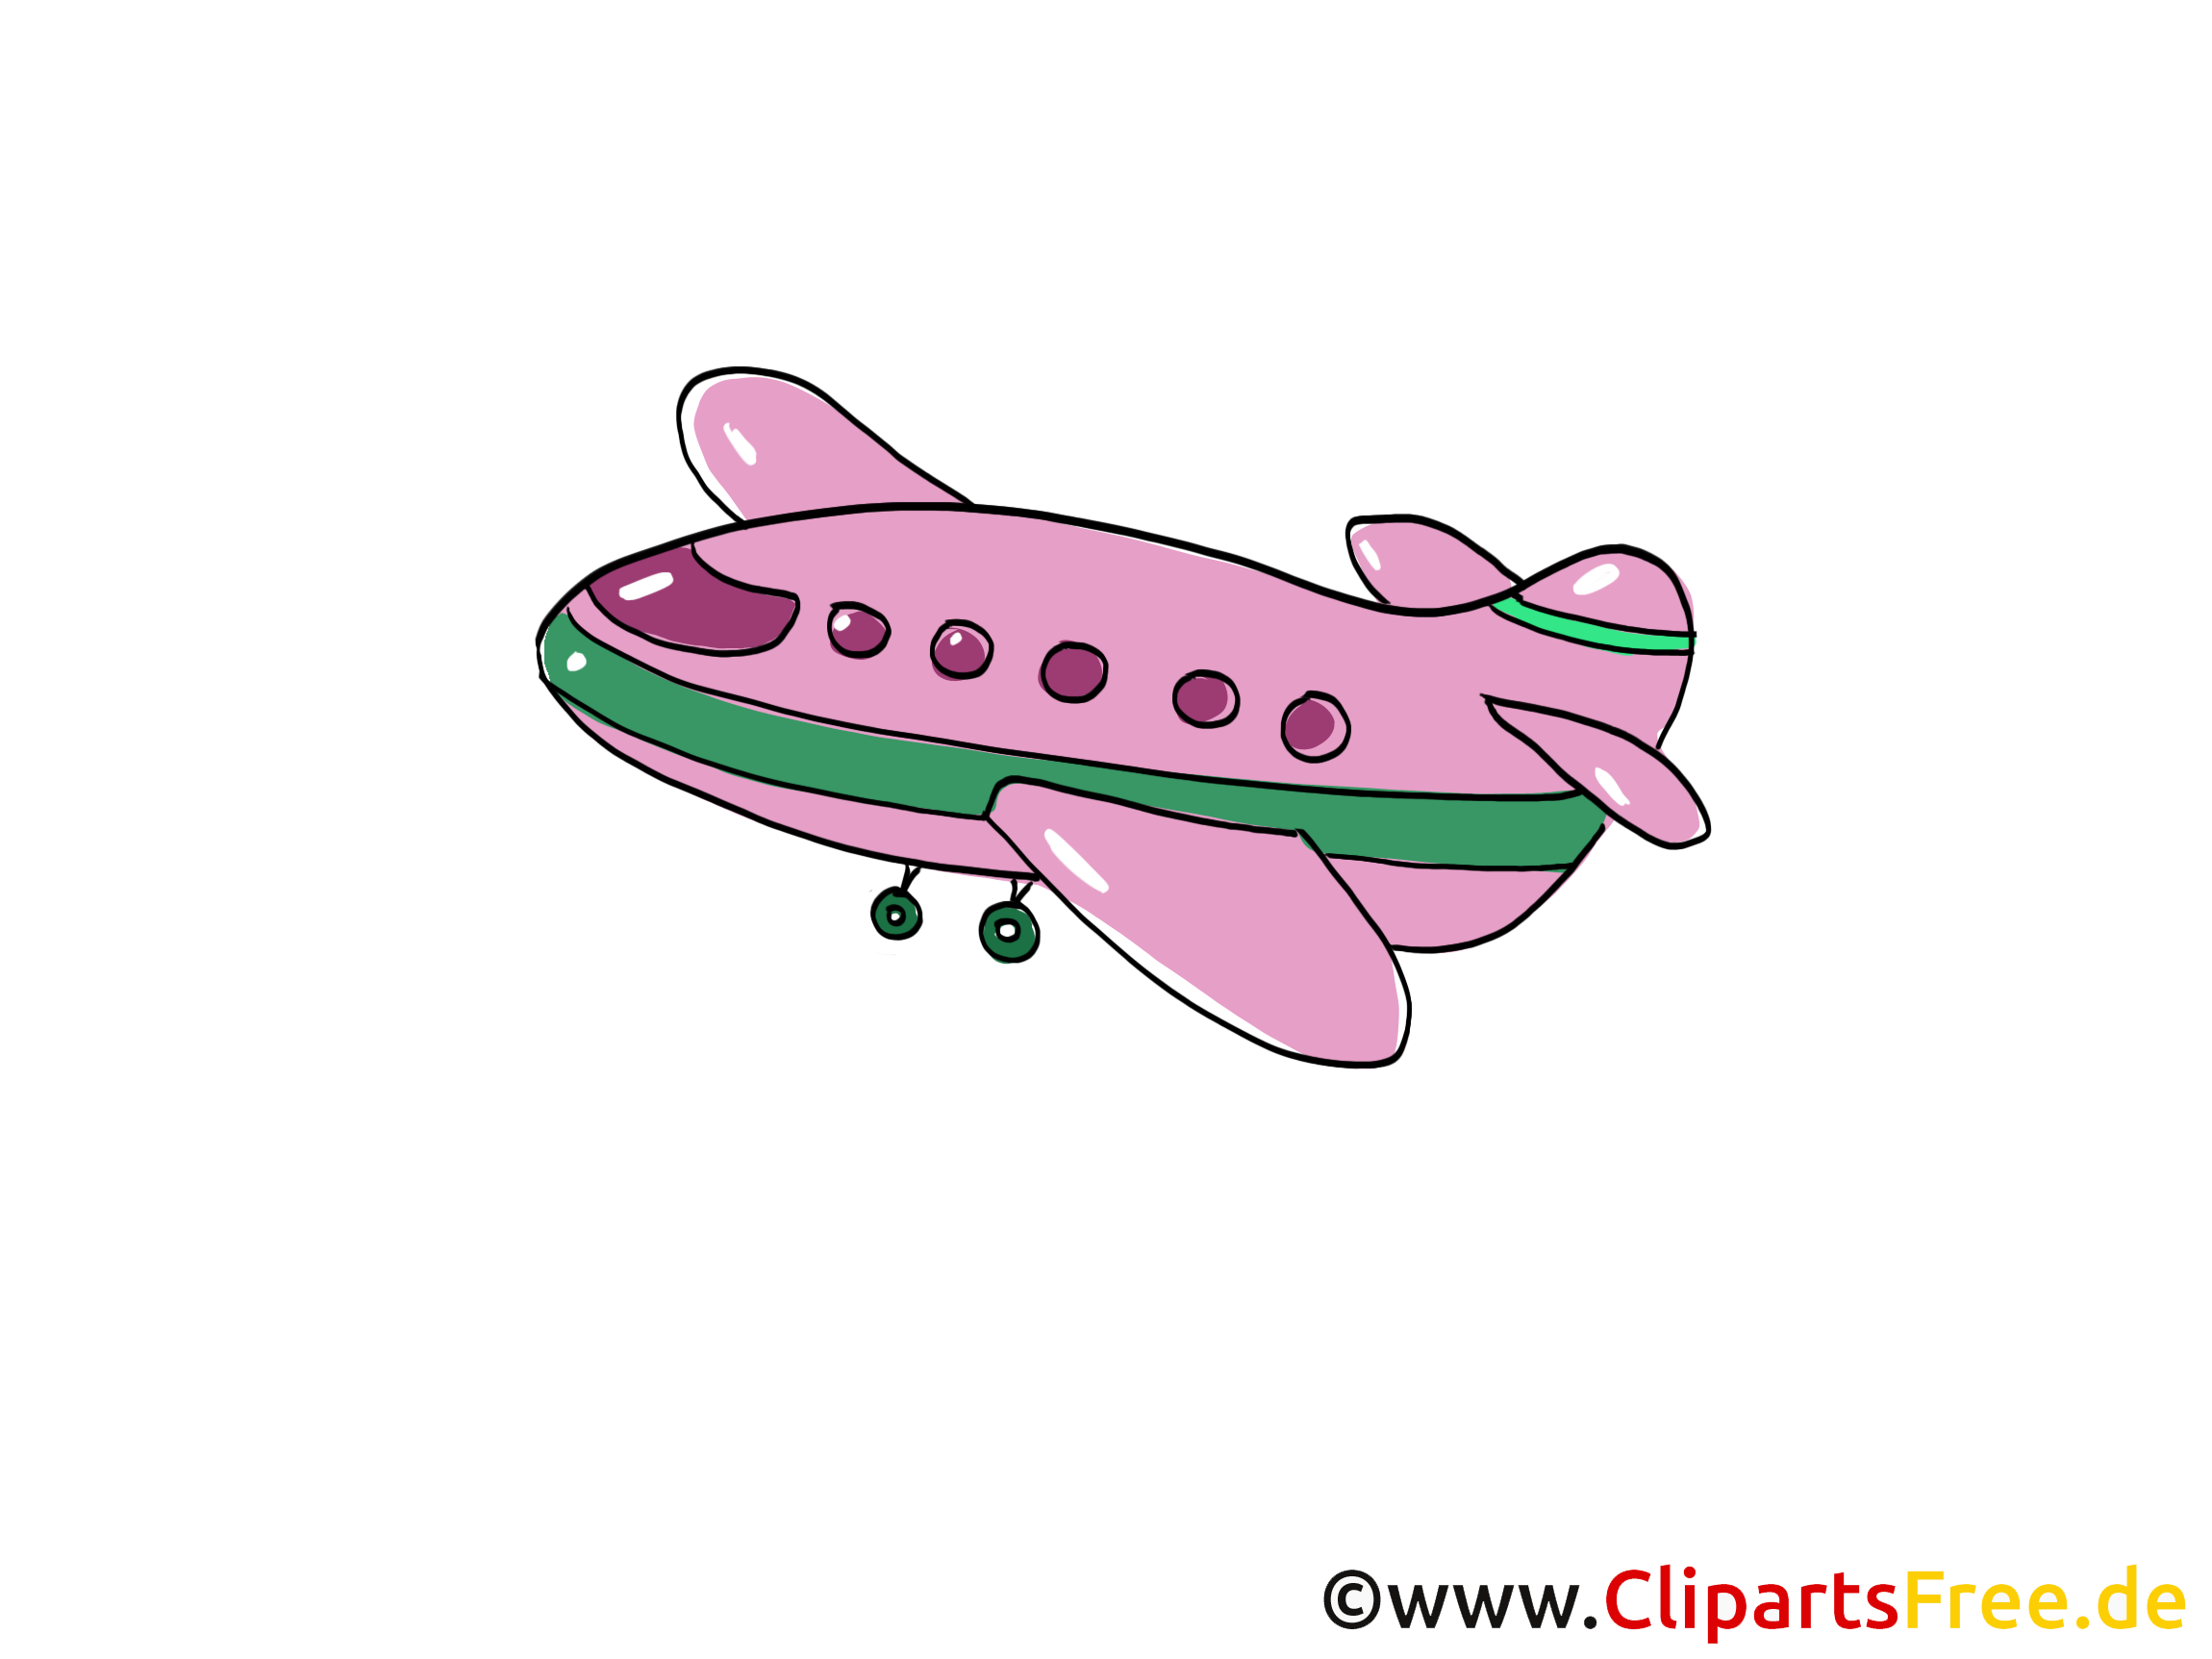 Avion image gratuite illustration - Technologie dessin ...